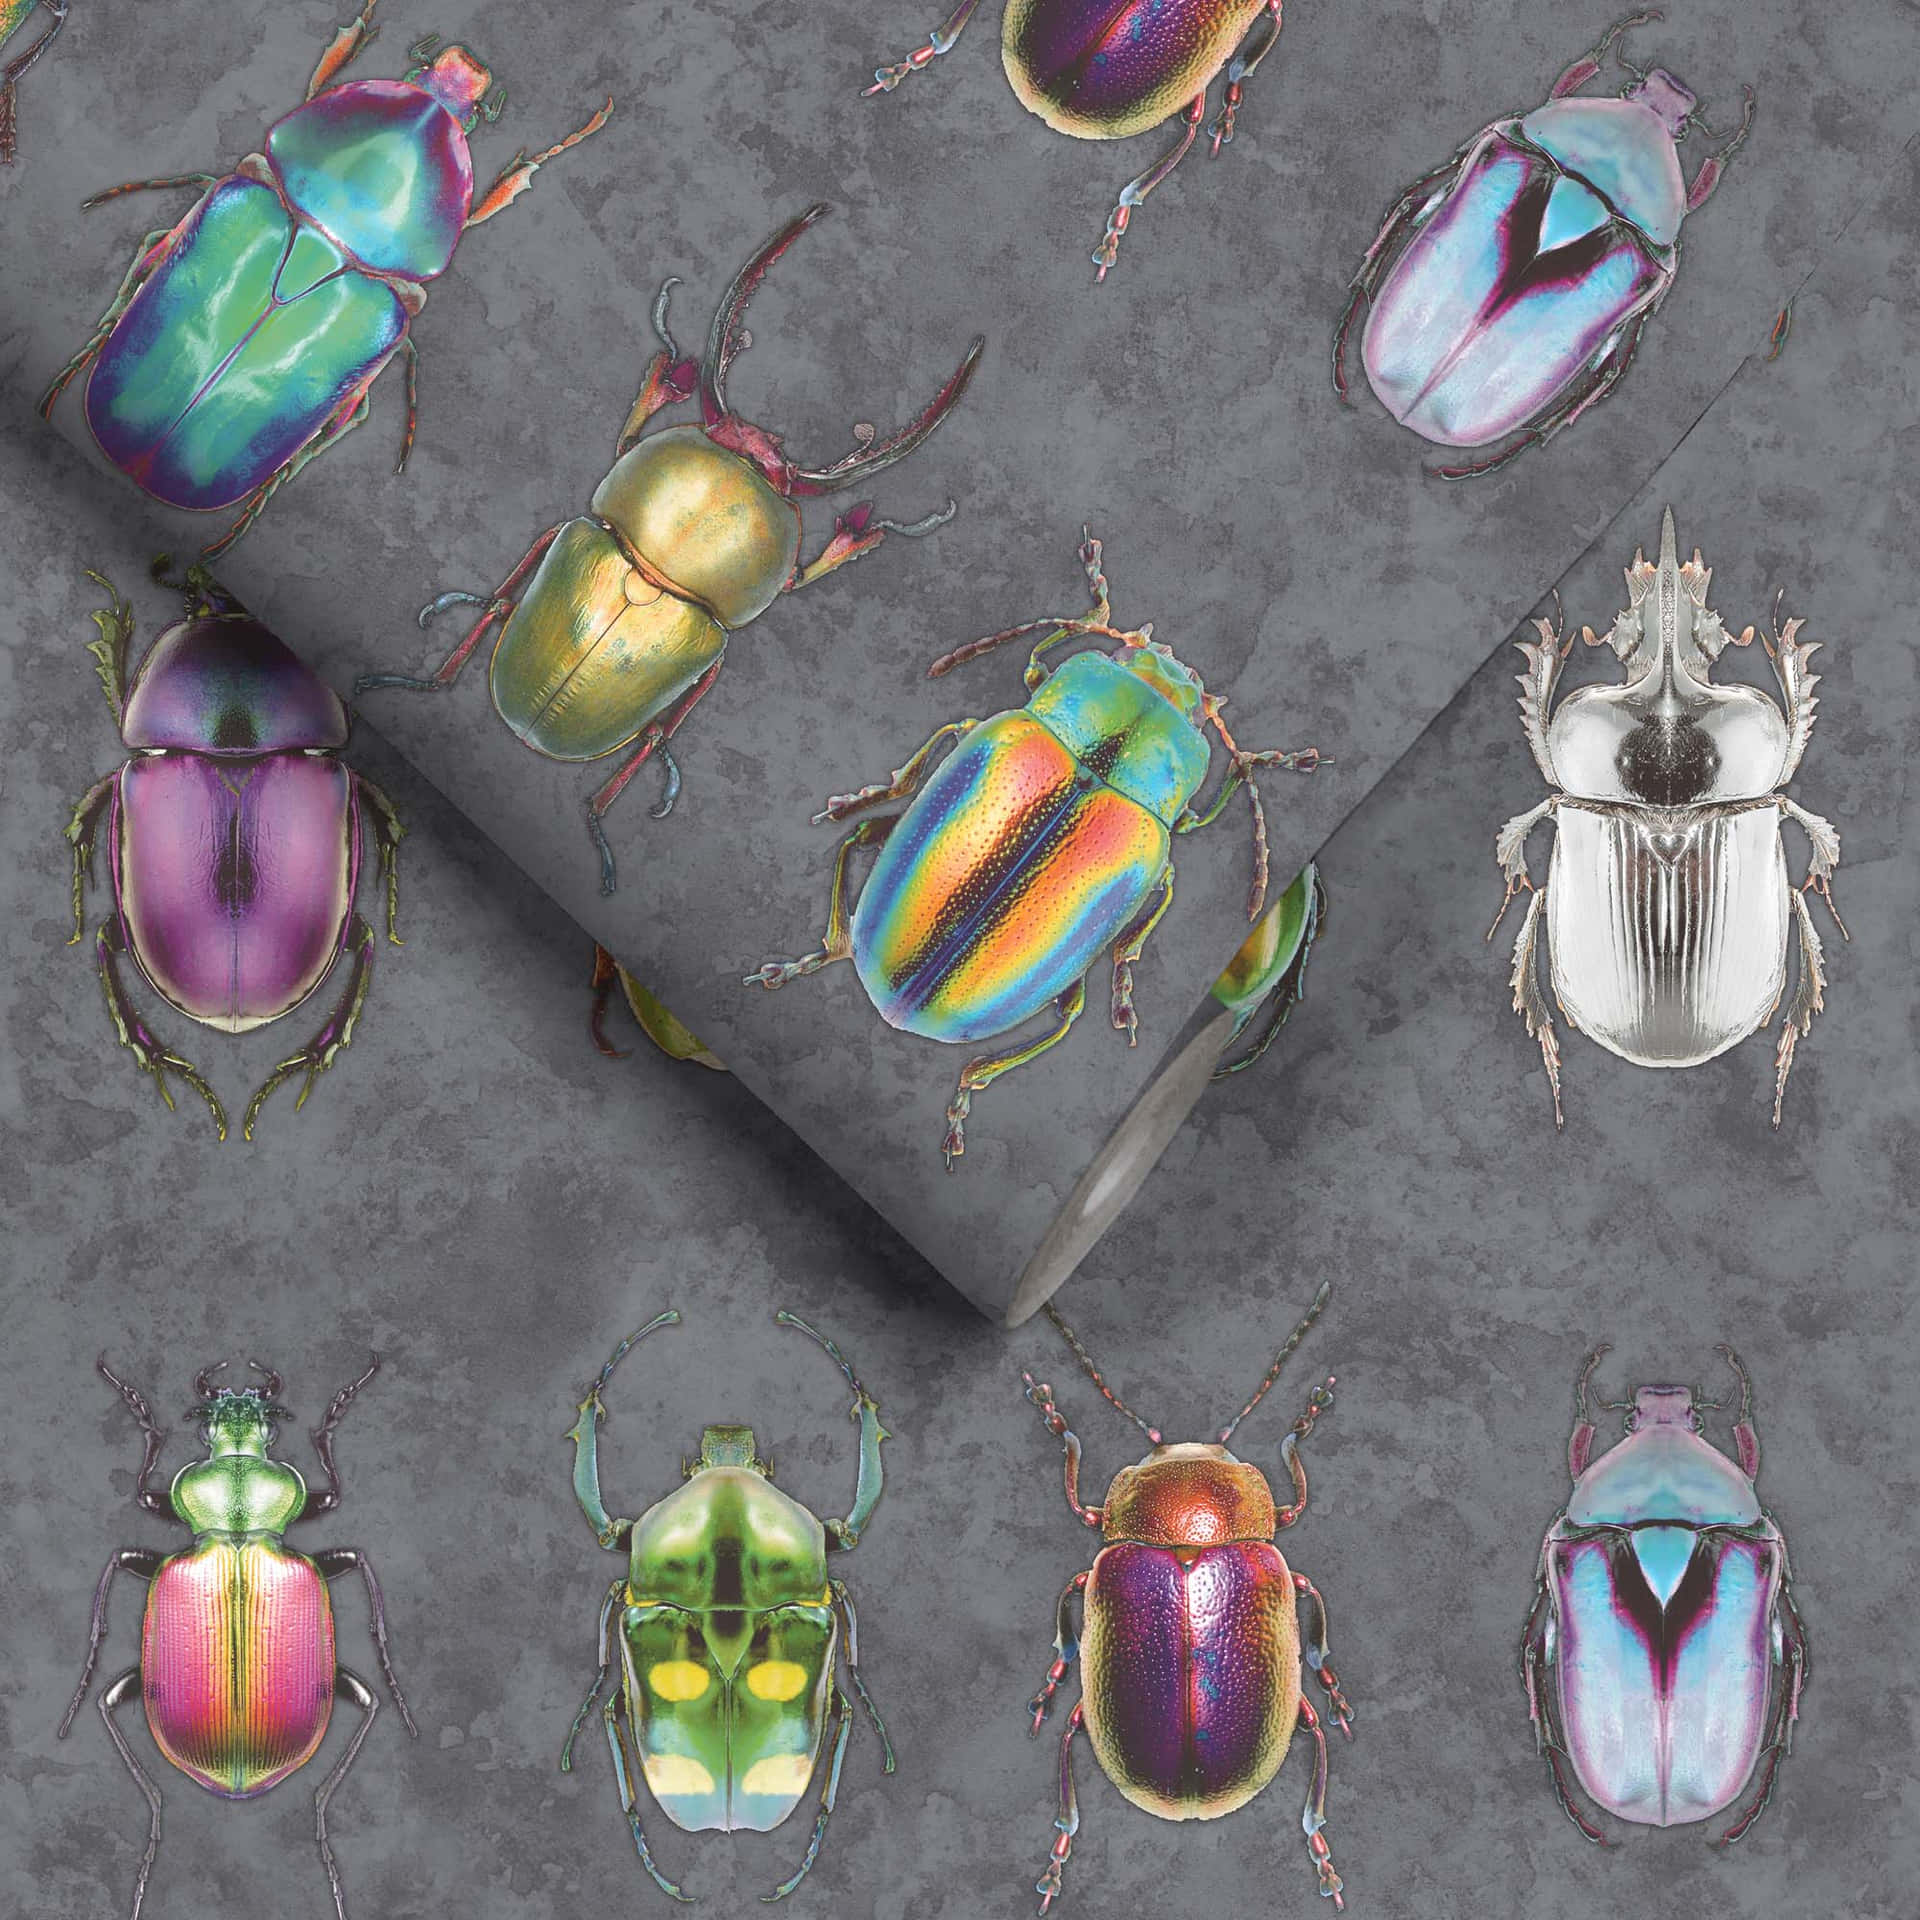 Buntekäferwand Insekten Dekoration Wallpaper